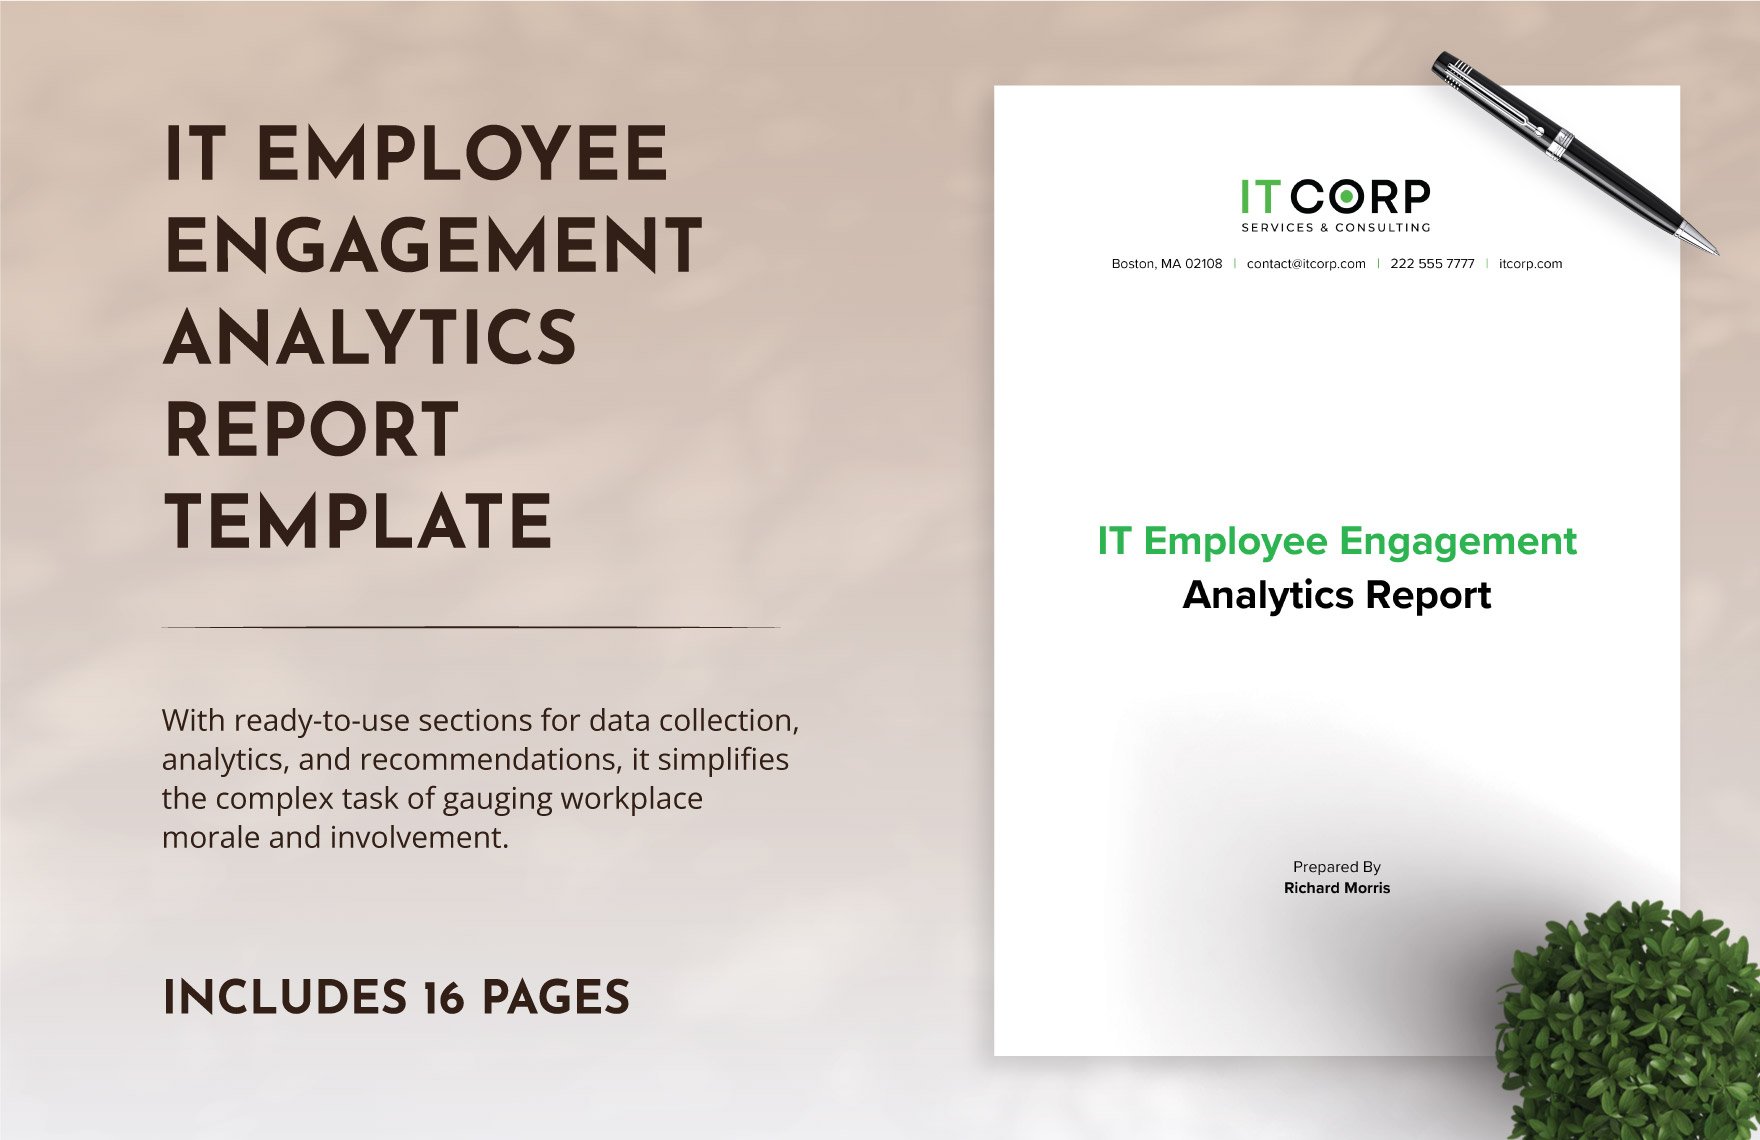 IT Employee Engagement Analytics Report Template